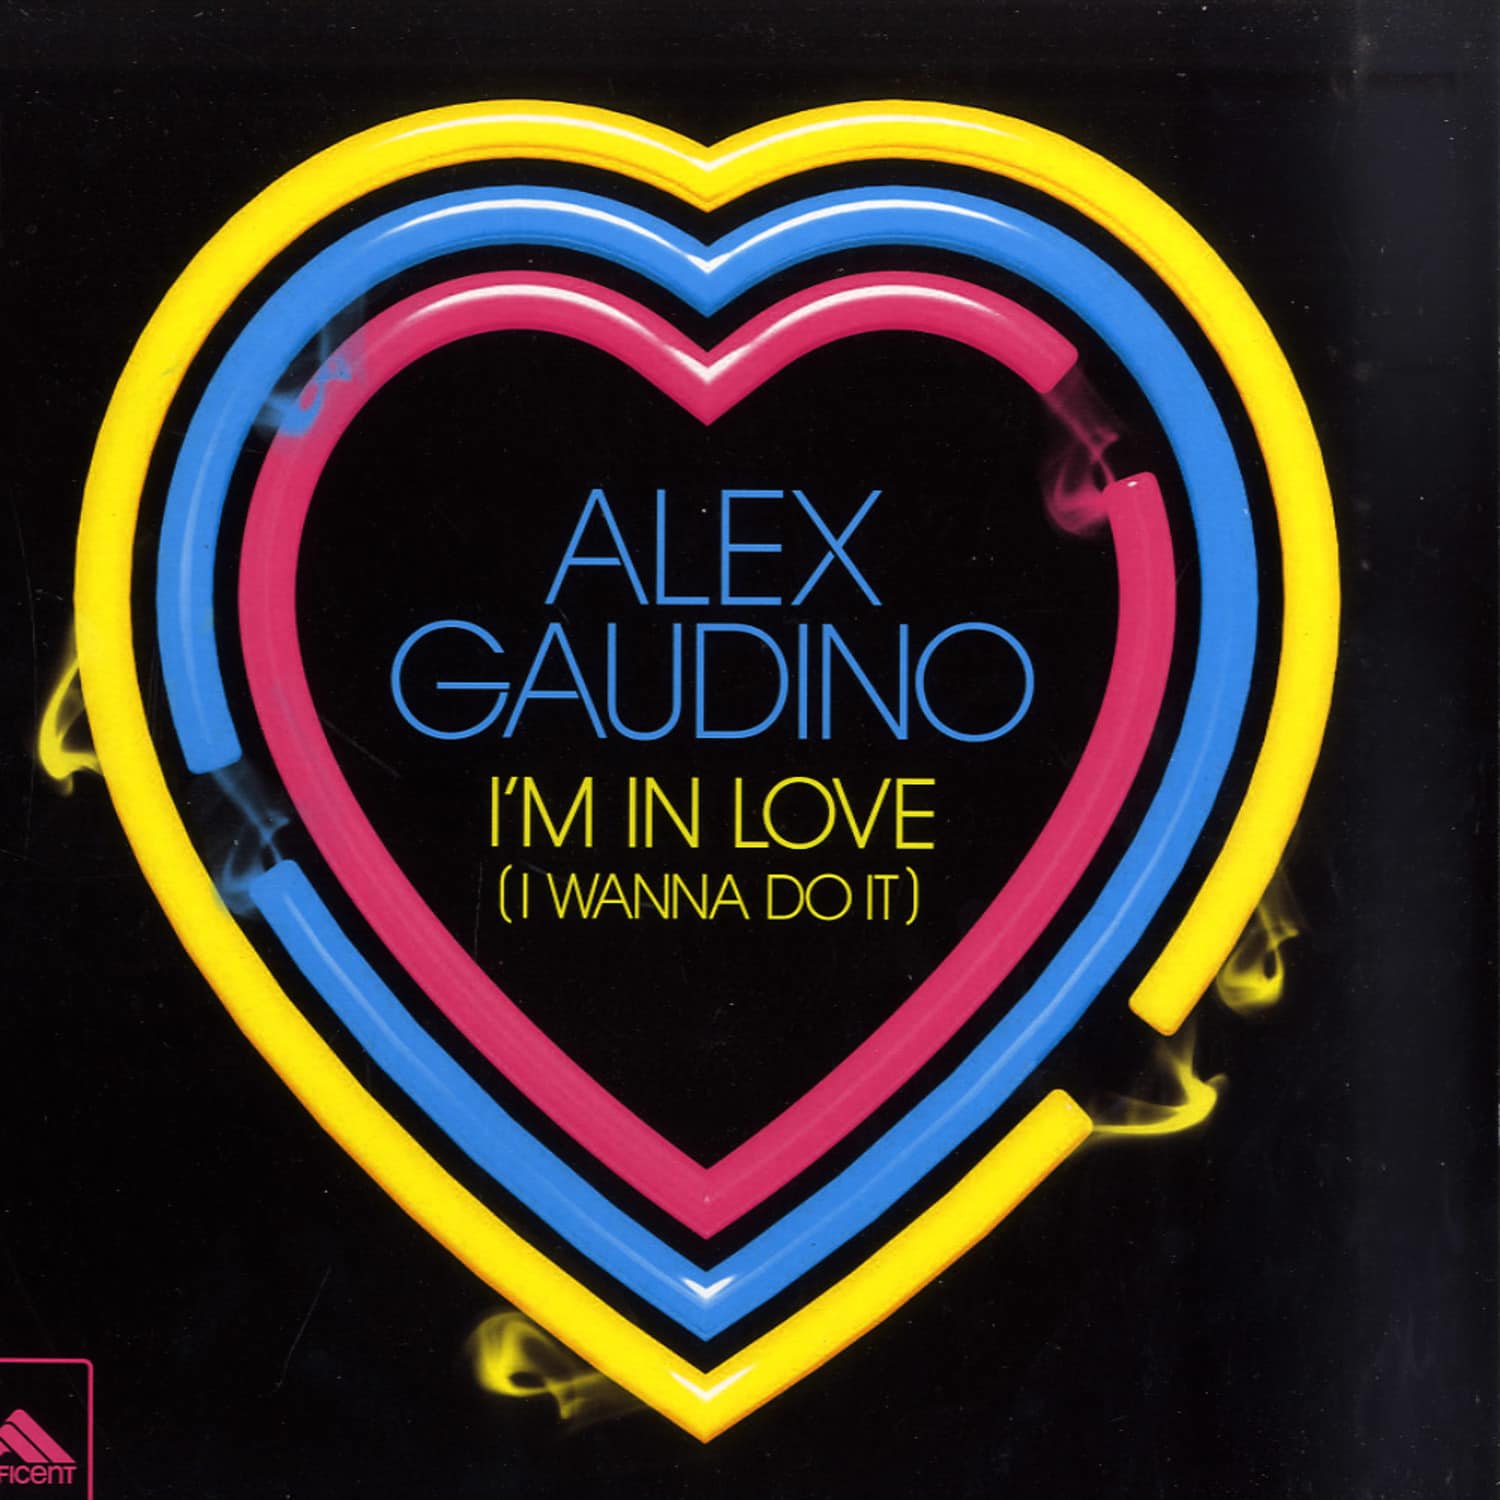 Alex Gaudino - IM IN LOVE 